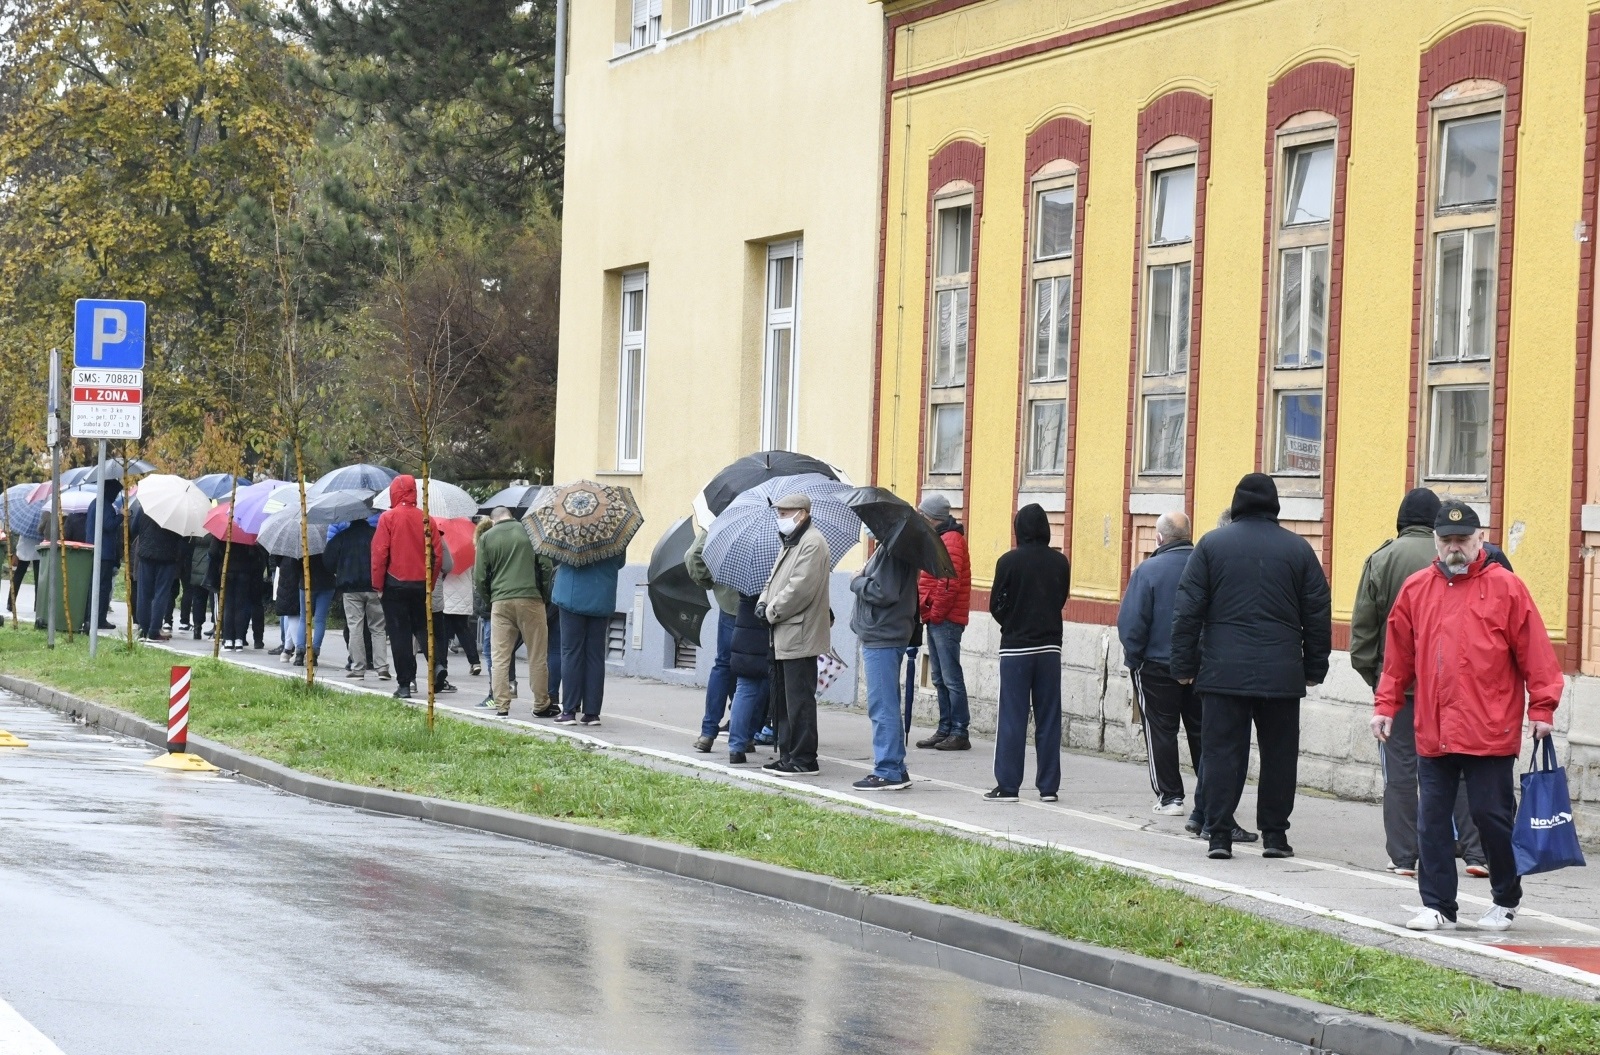 20.11.2020., Sisak - Redovi ispred Doma zdravlja za testiranje na COVID-19. Photo: Nikola Cutuk/PIXSELL